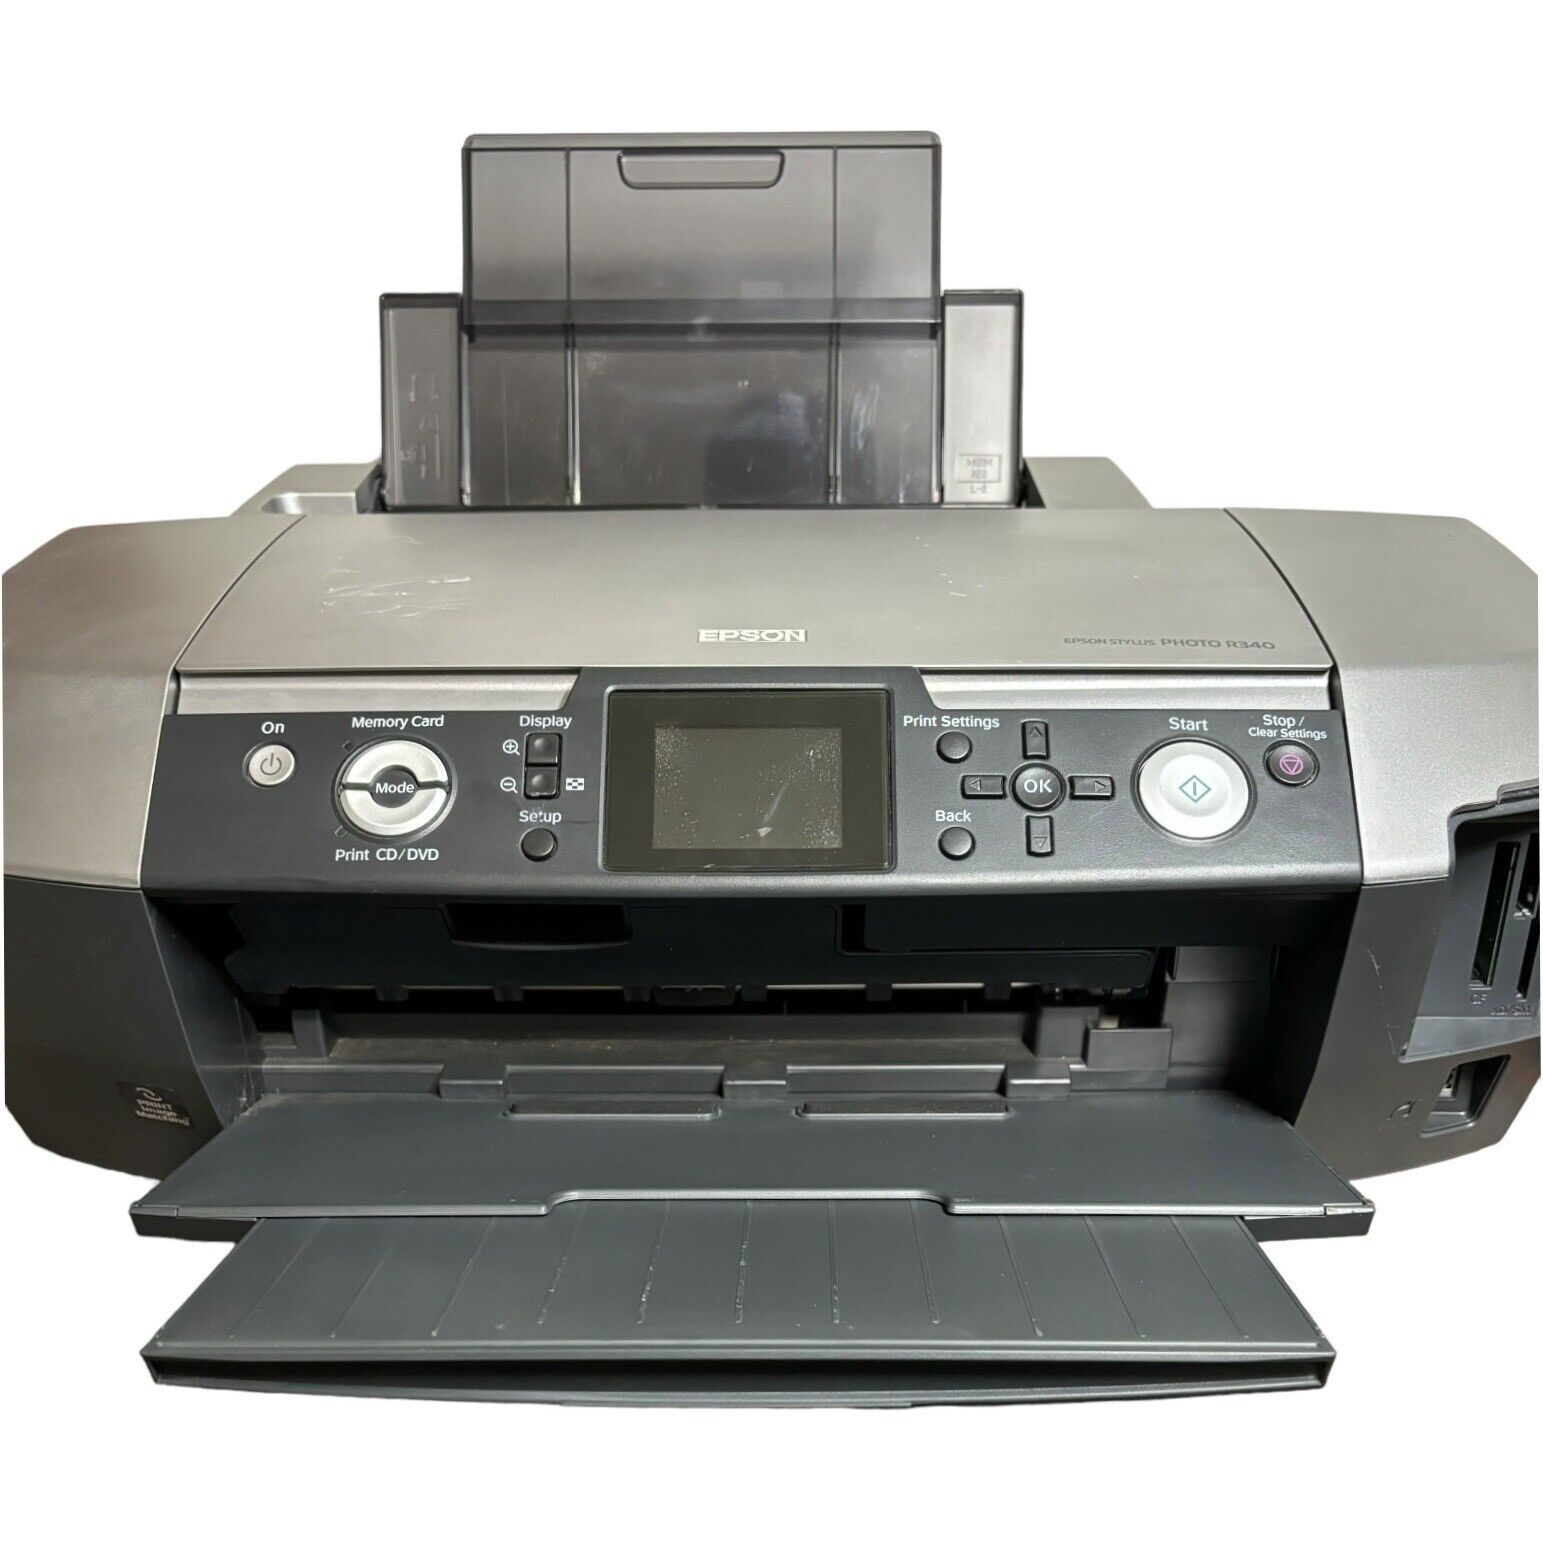 Epson Stylus Photo R340 Digital Printer Inkjet 2.4” LCD Display - Tested & Works